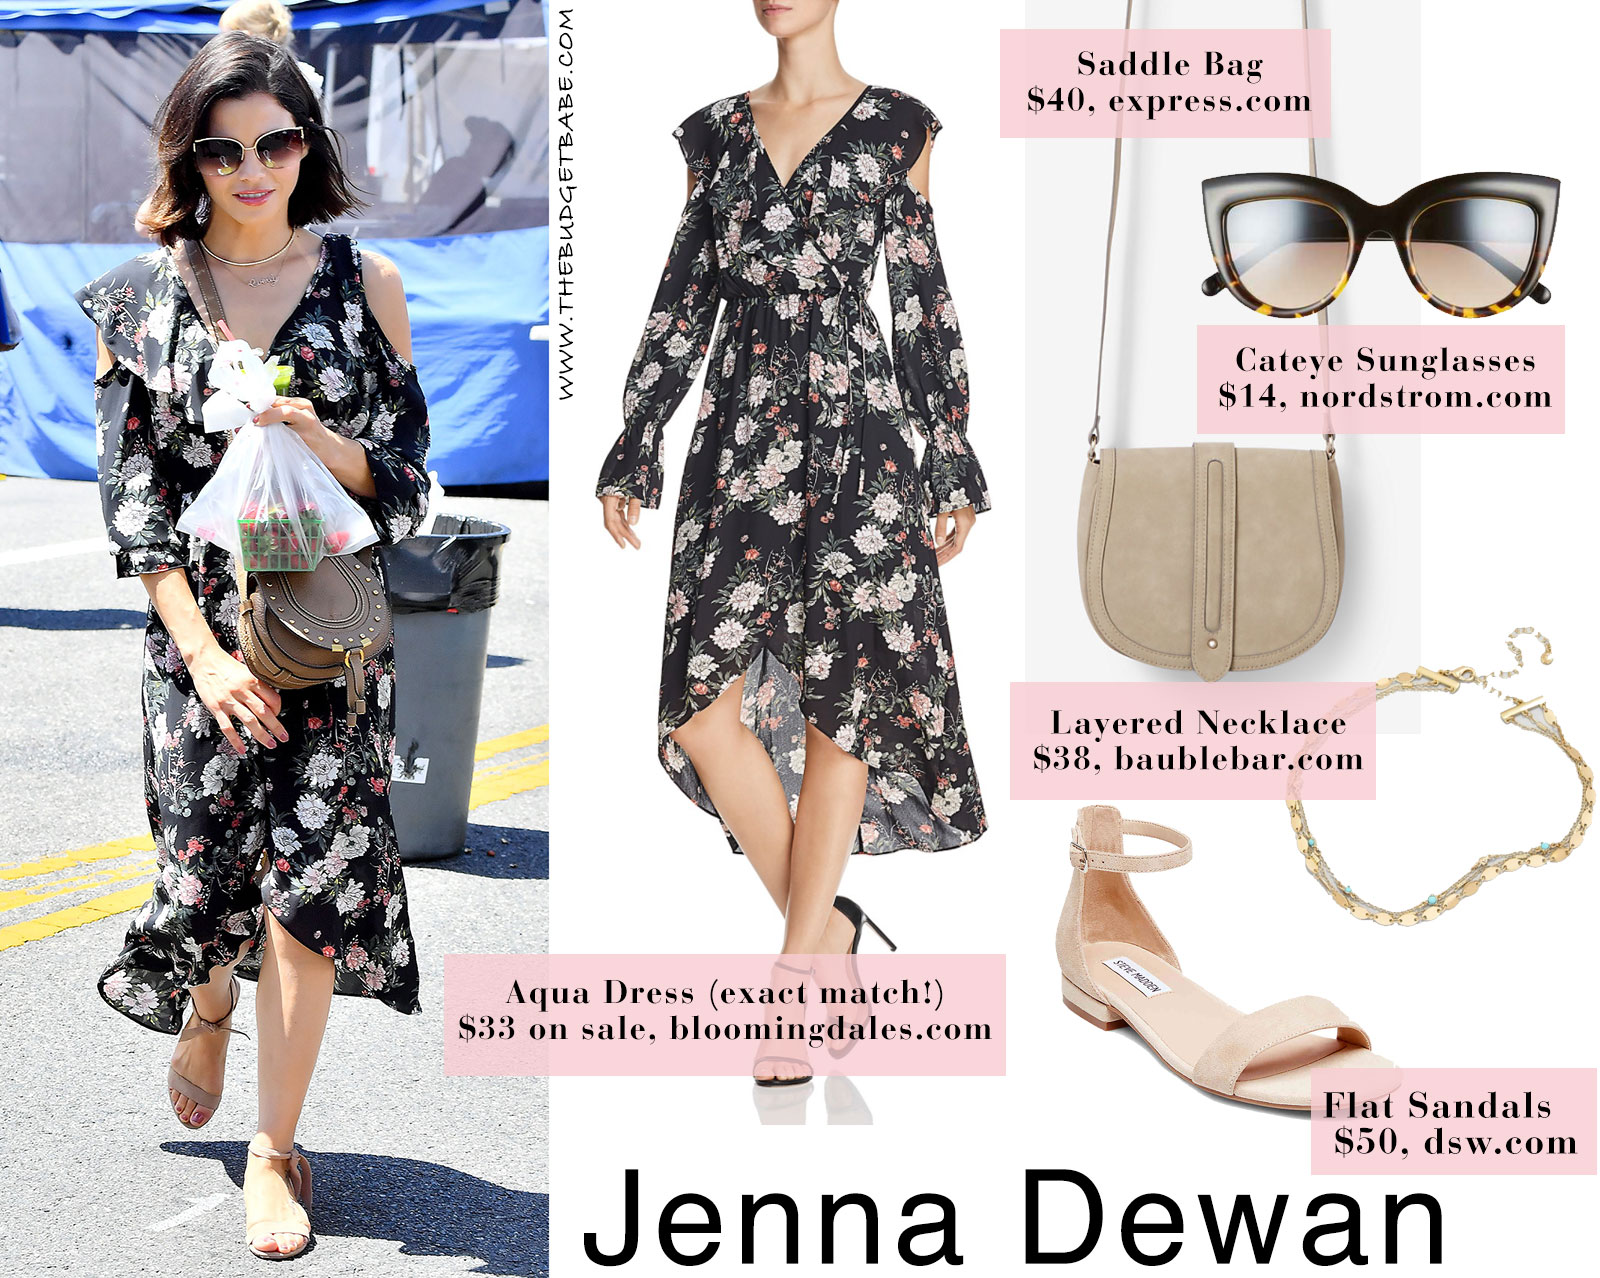 Jenna Dewan's exact dress is just $33 on sale